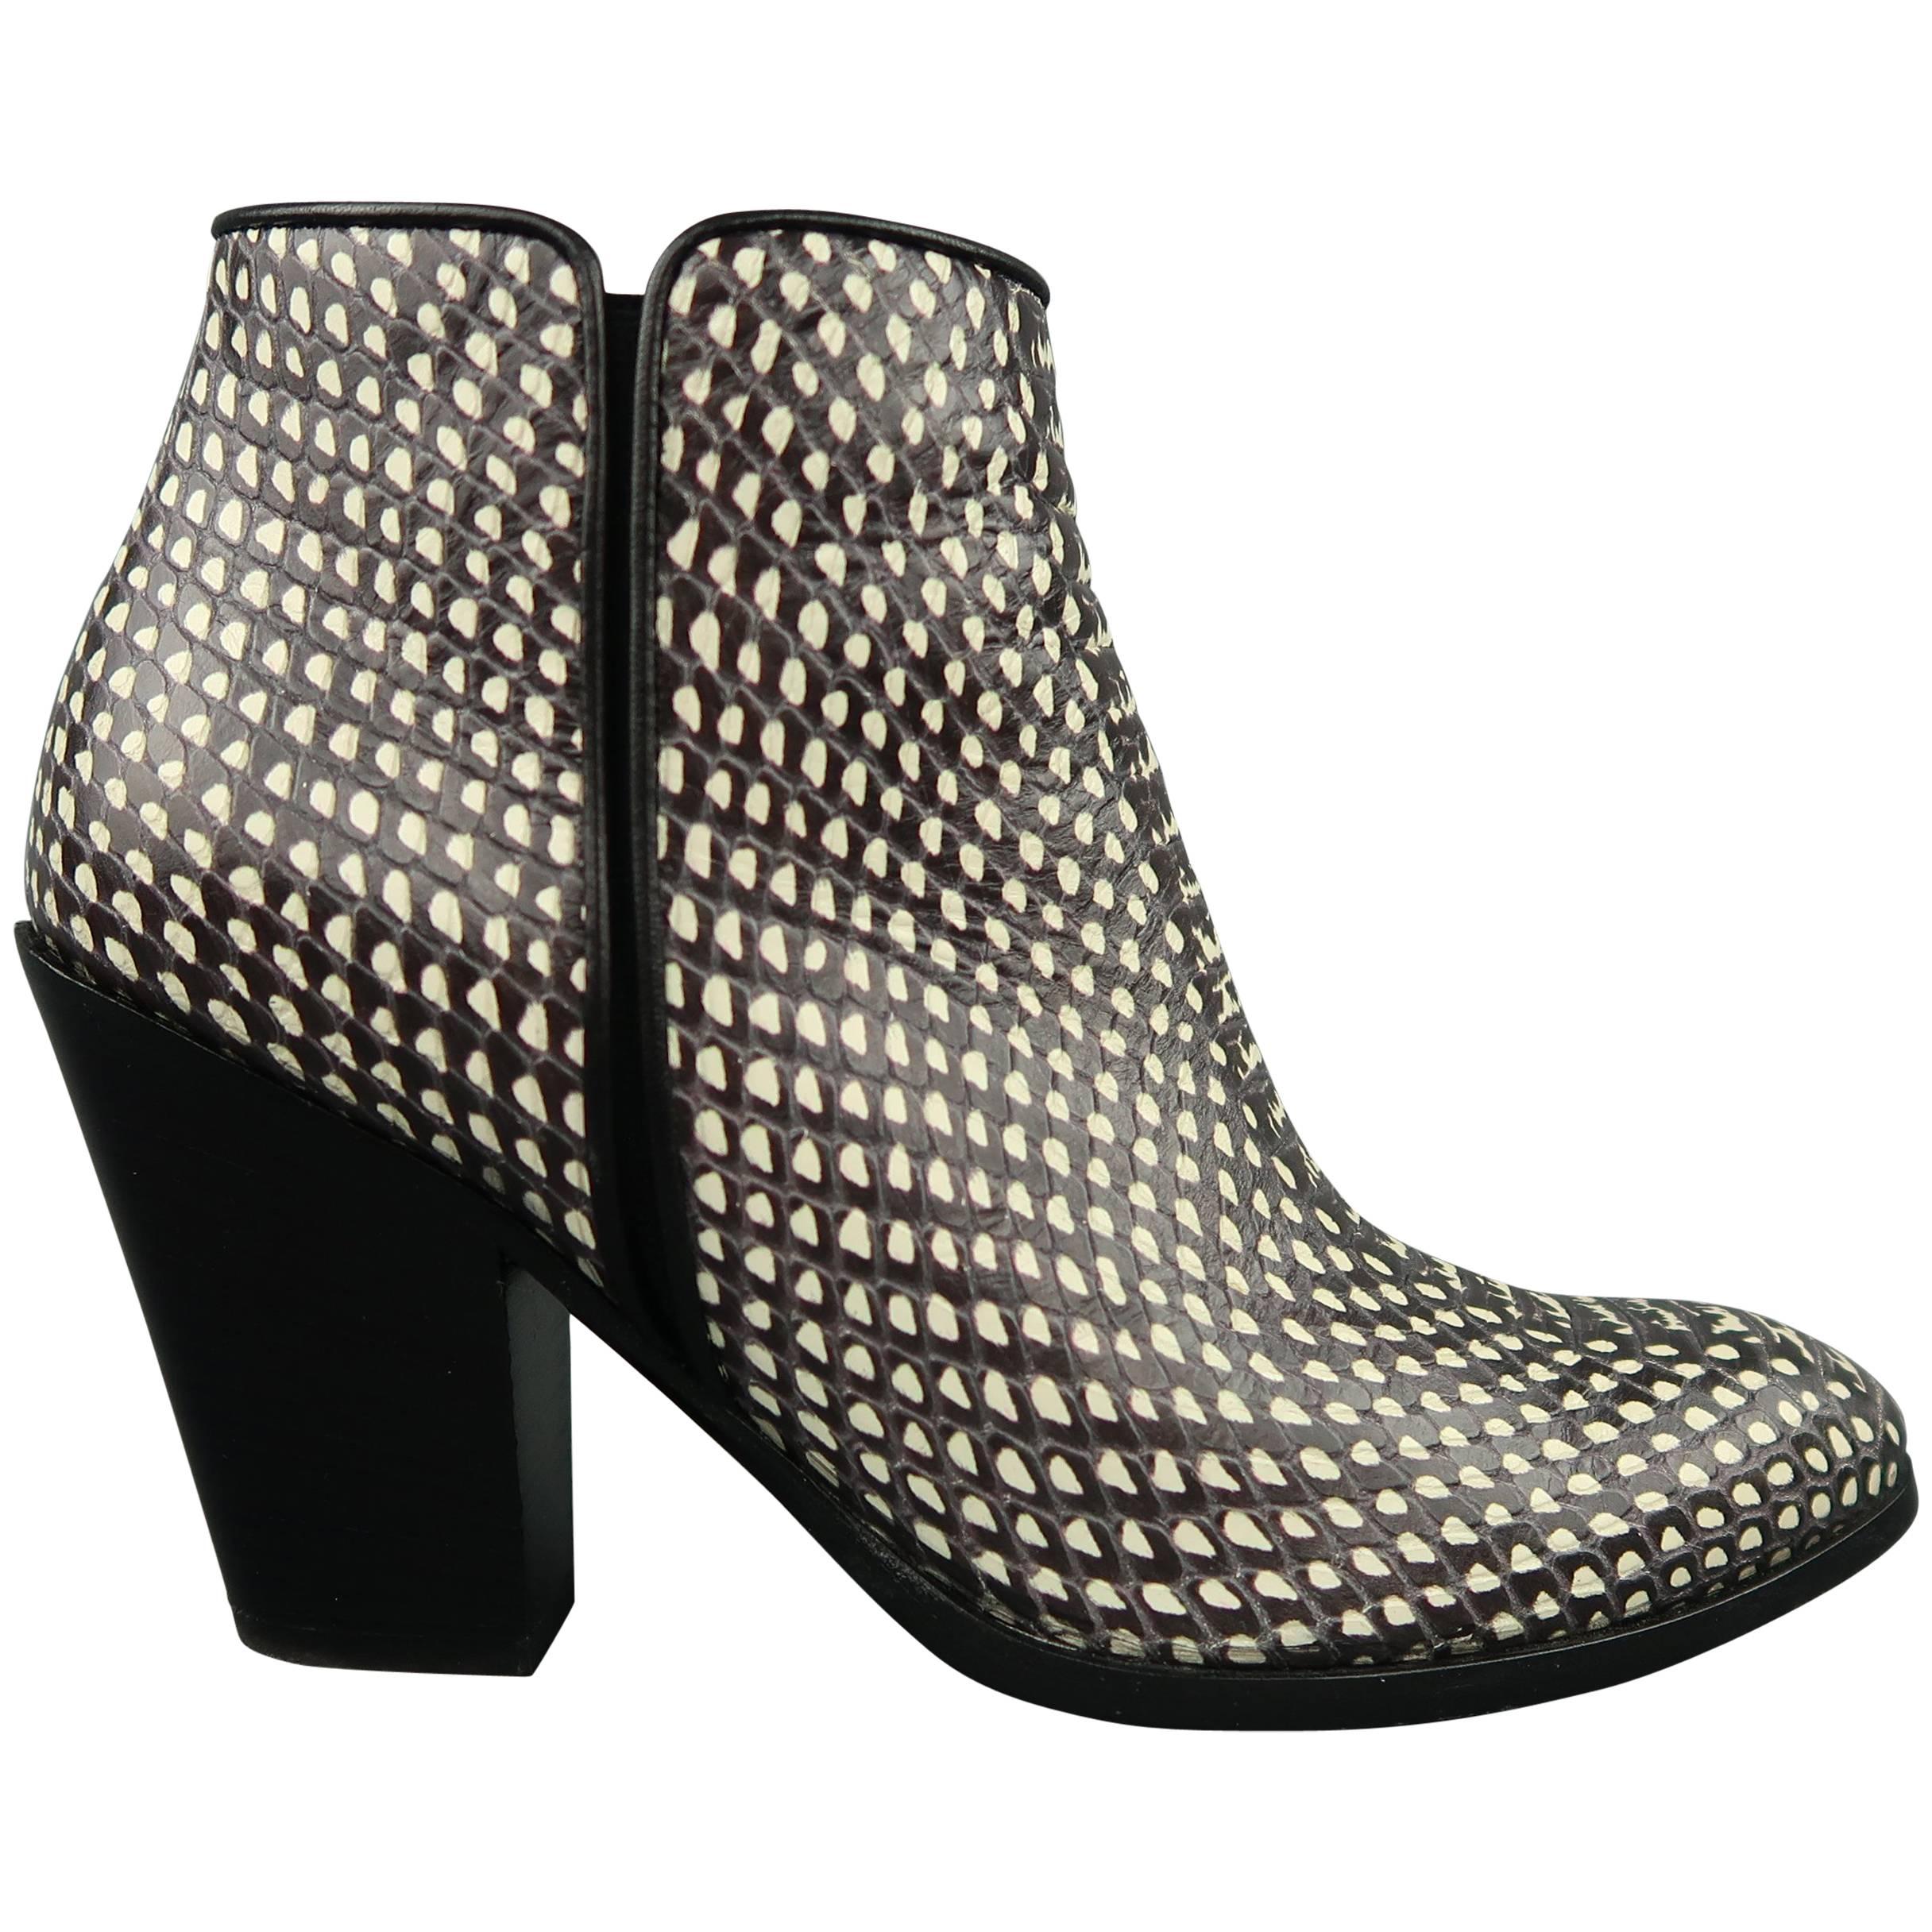 GIUSEPPE ZANOTTI Size 7.5 Black & White Snake Leather Ankle Boots